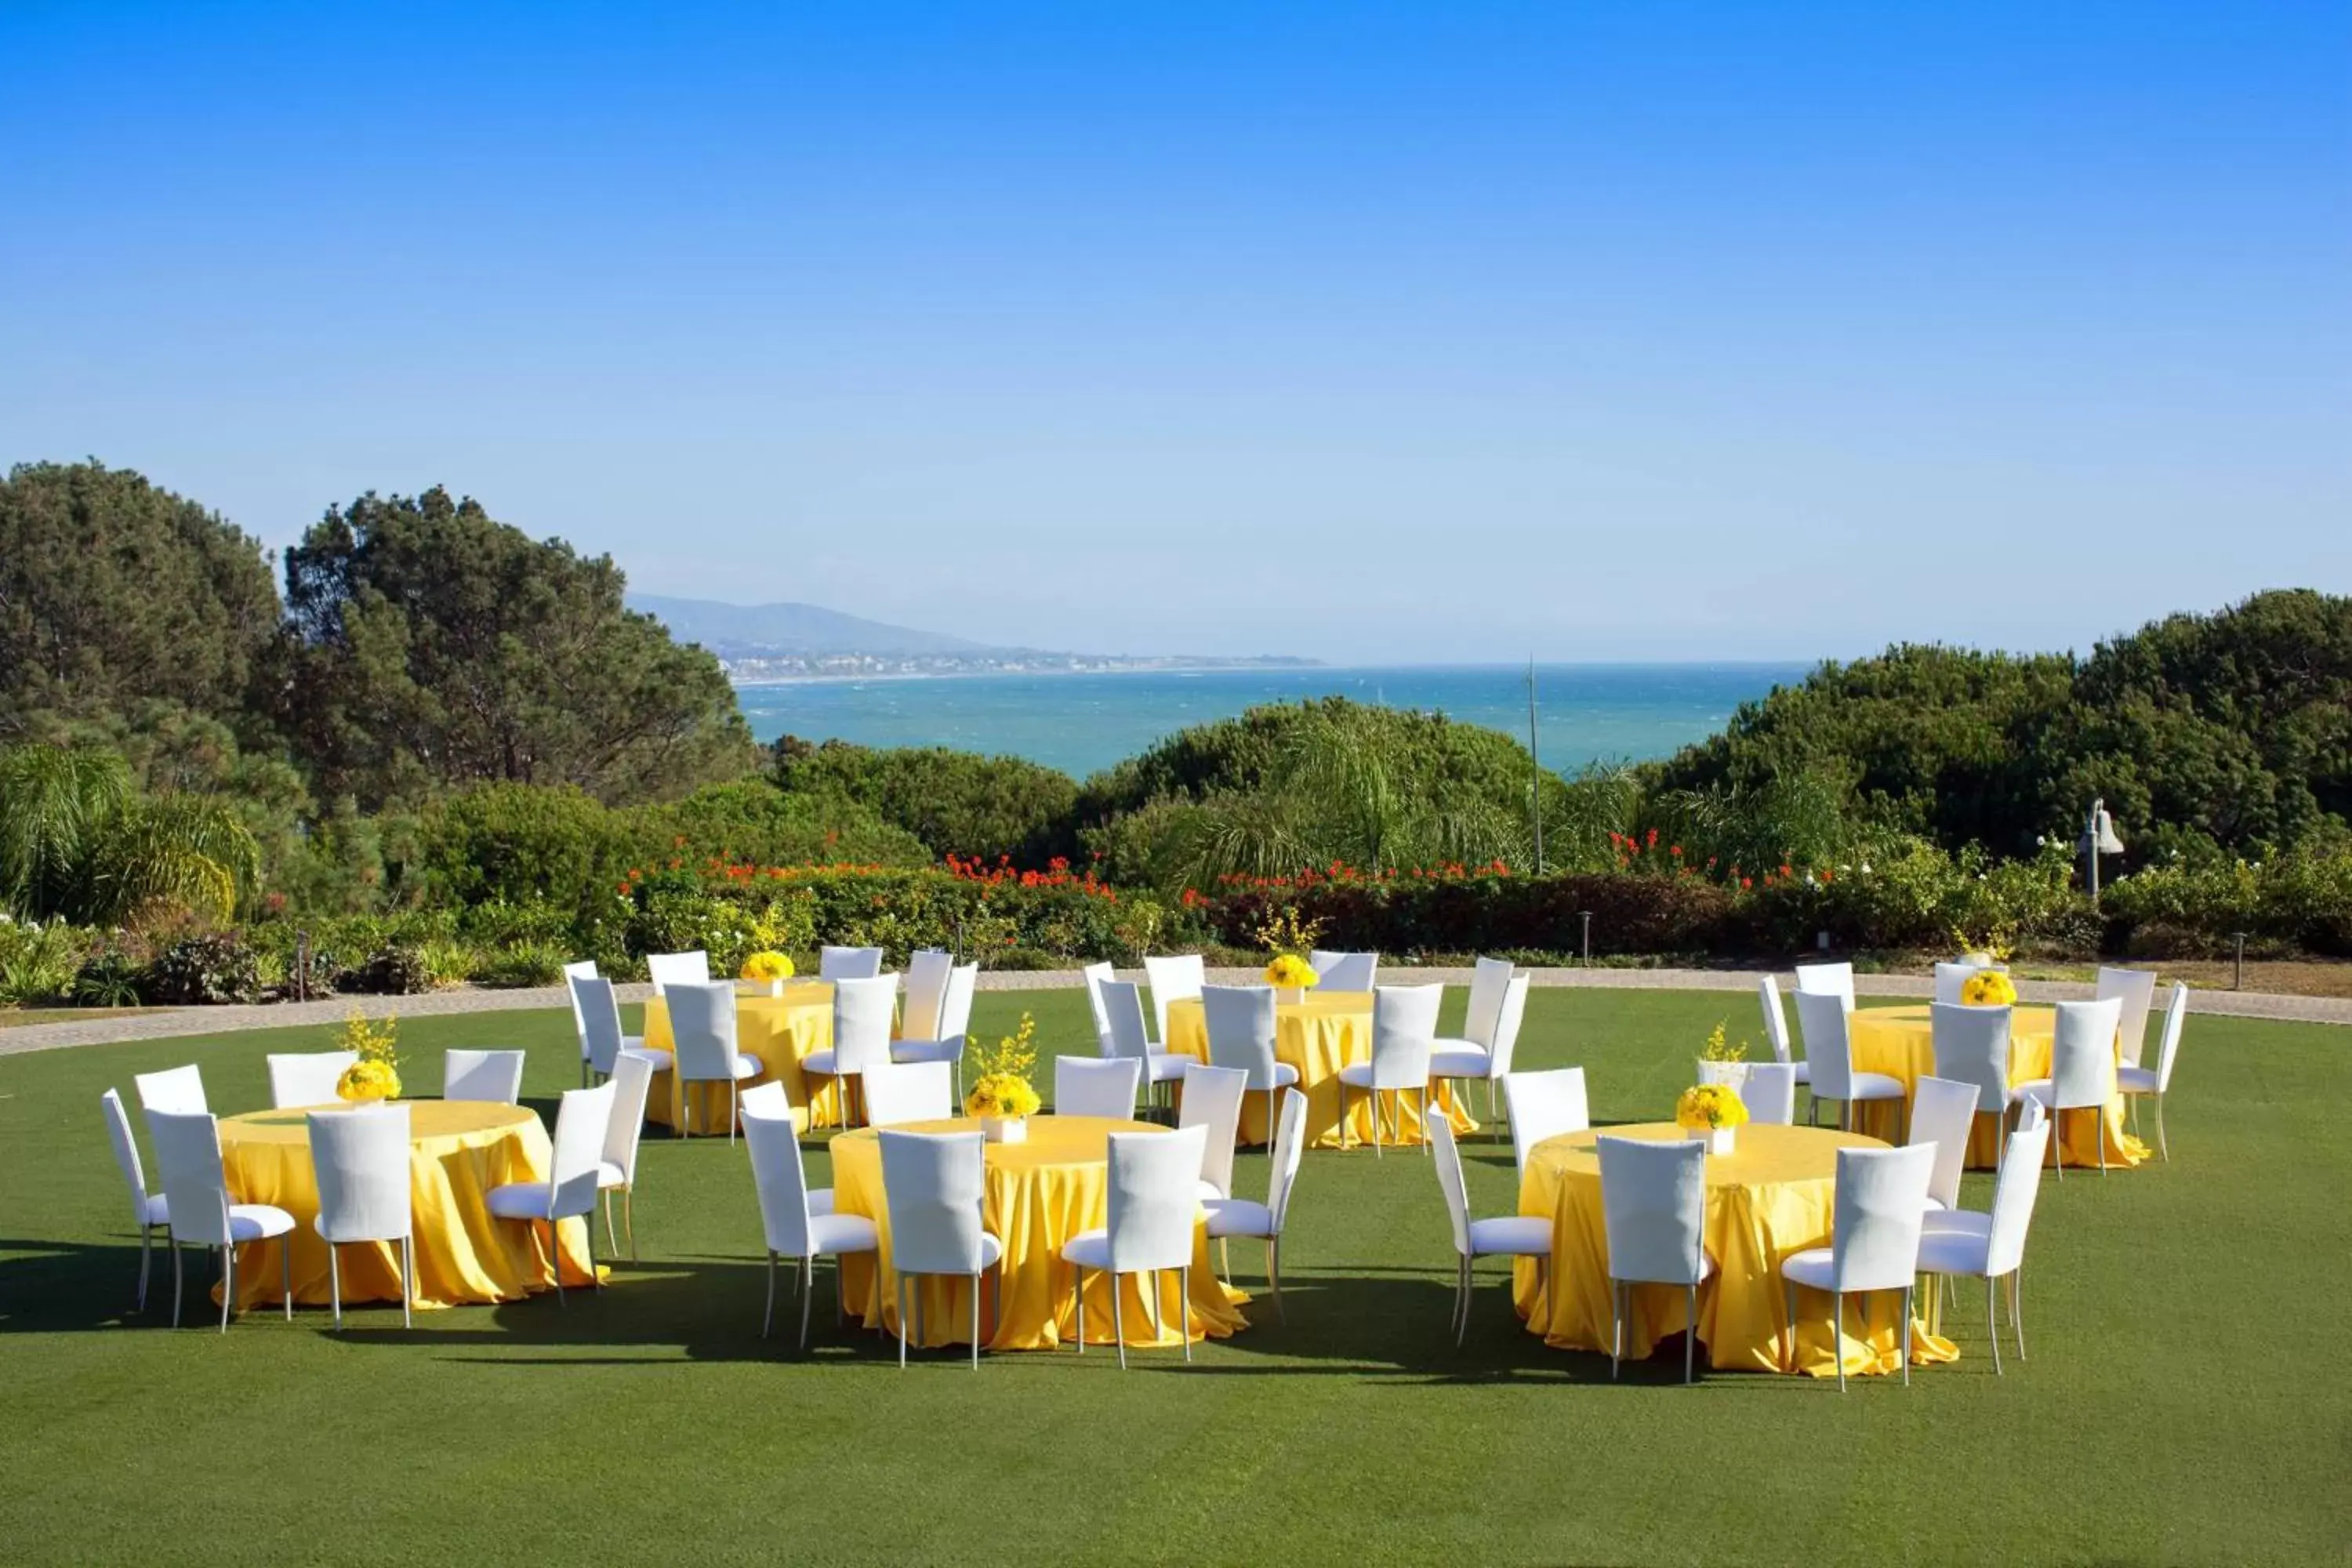 Meeting/conference room, Banquet Facilities in Laguna Cliffs Marriott Resort & Spa